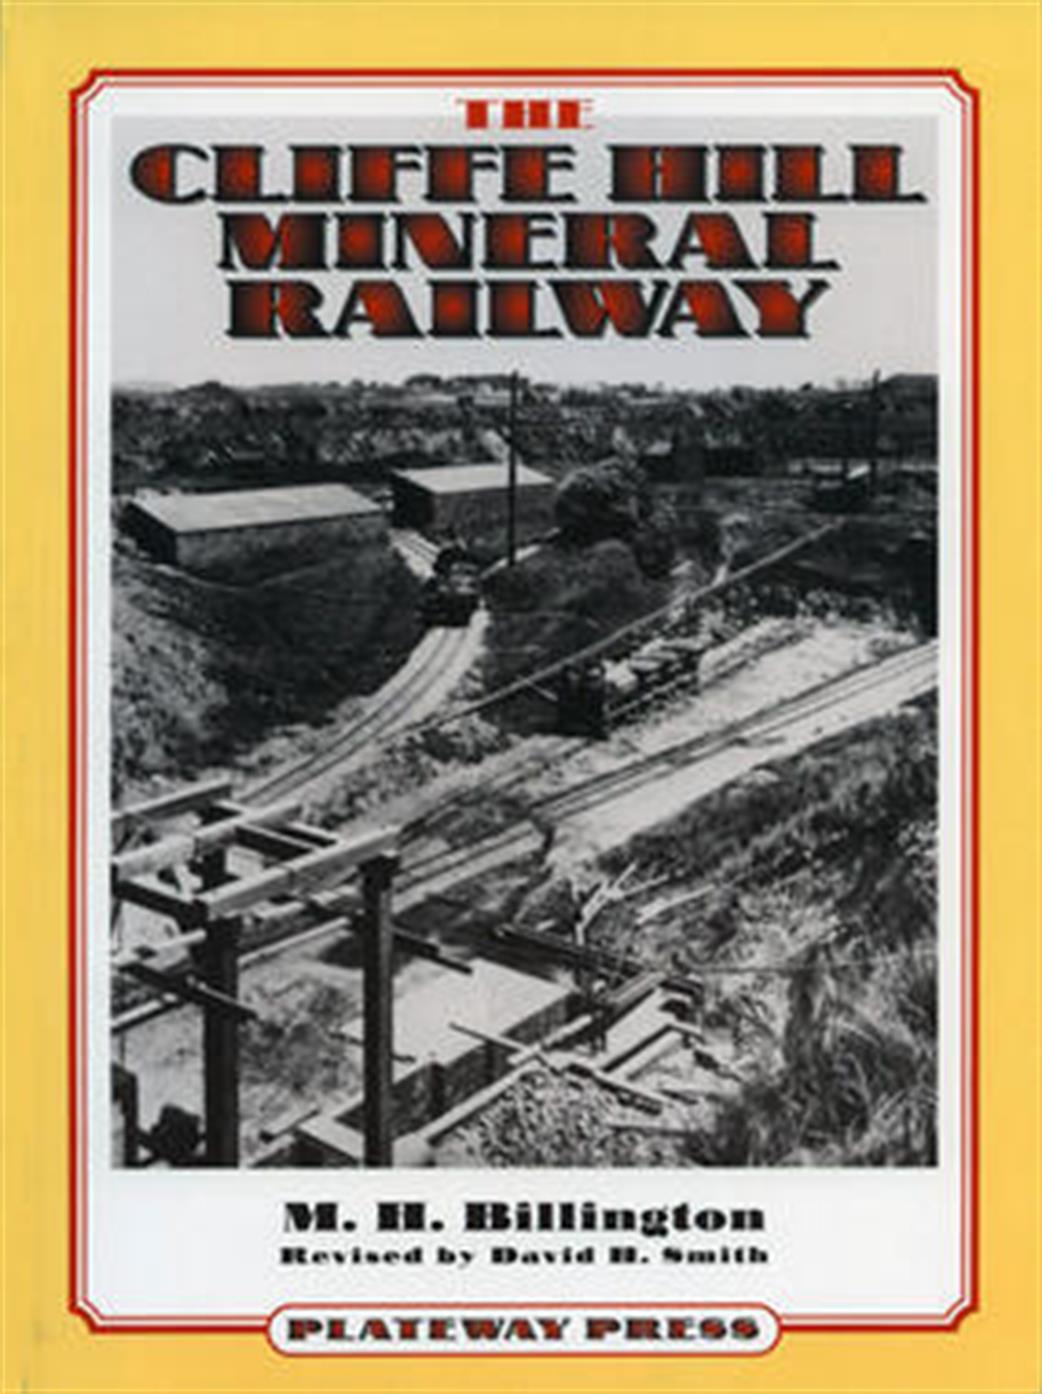 Plateway Press  CLIFFE Cliffe Hill Mineral Railway Book by M H Billington / D H Smith